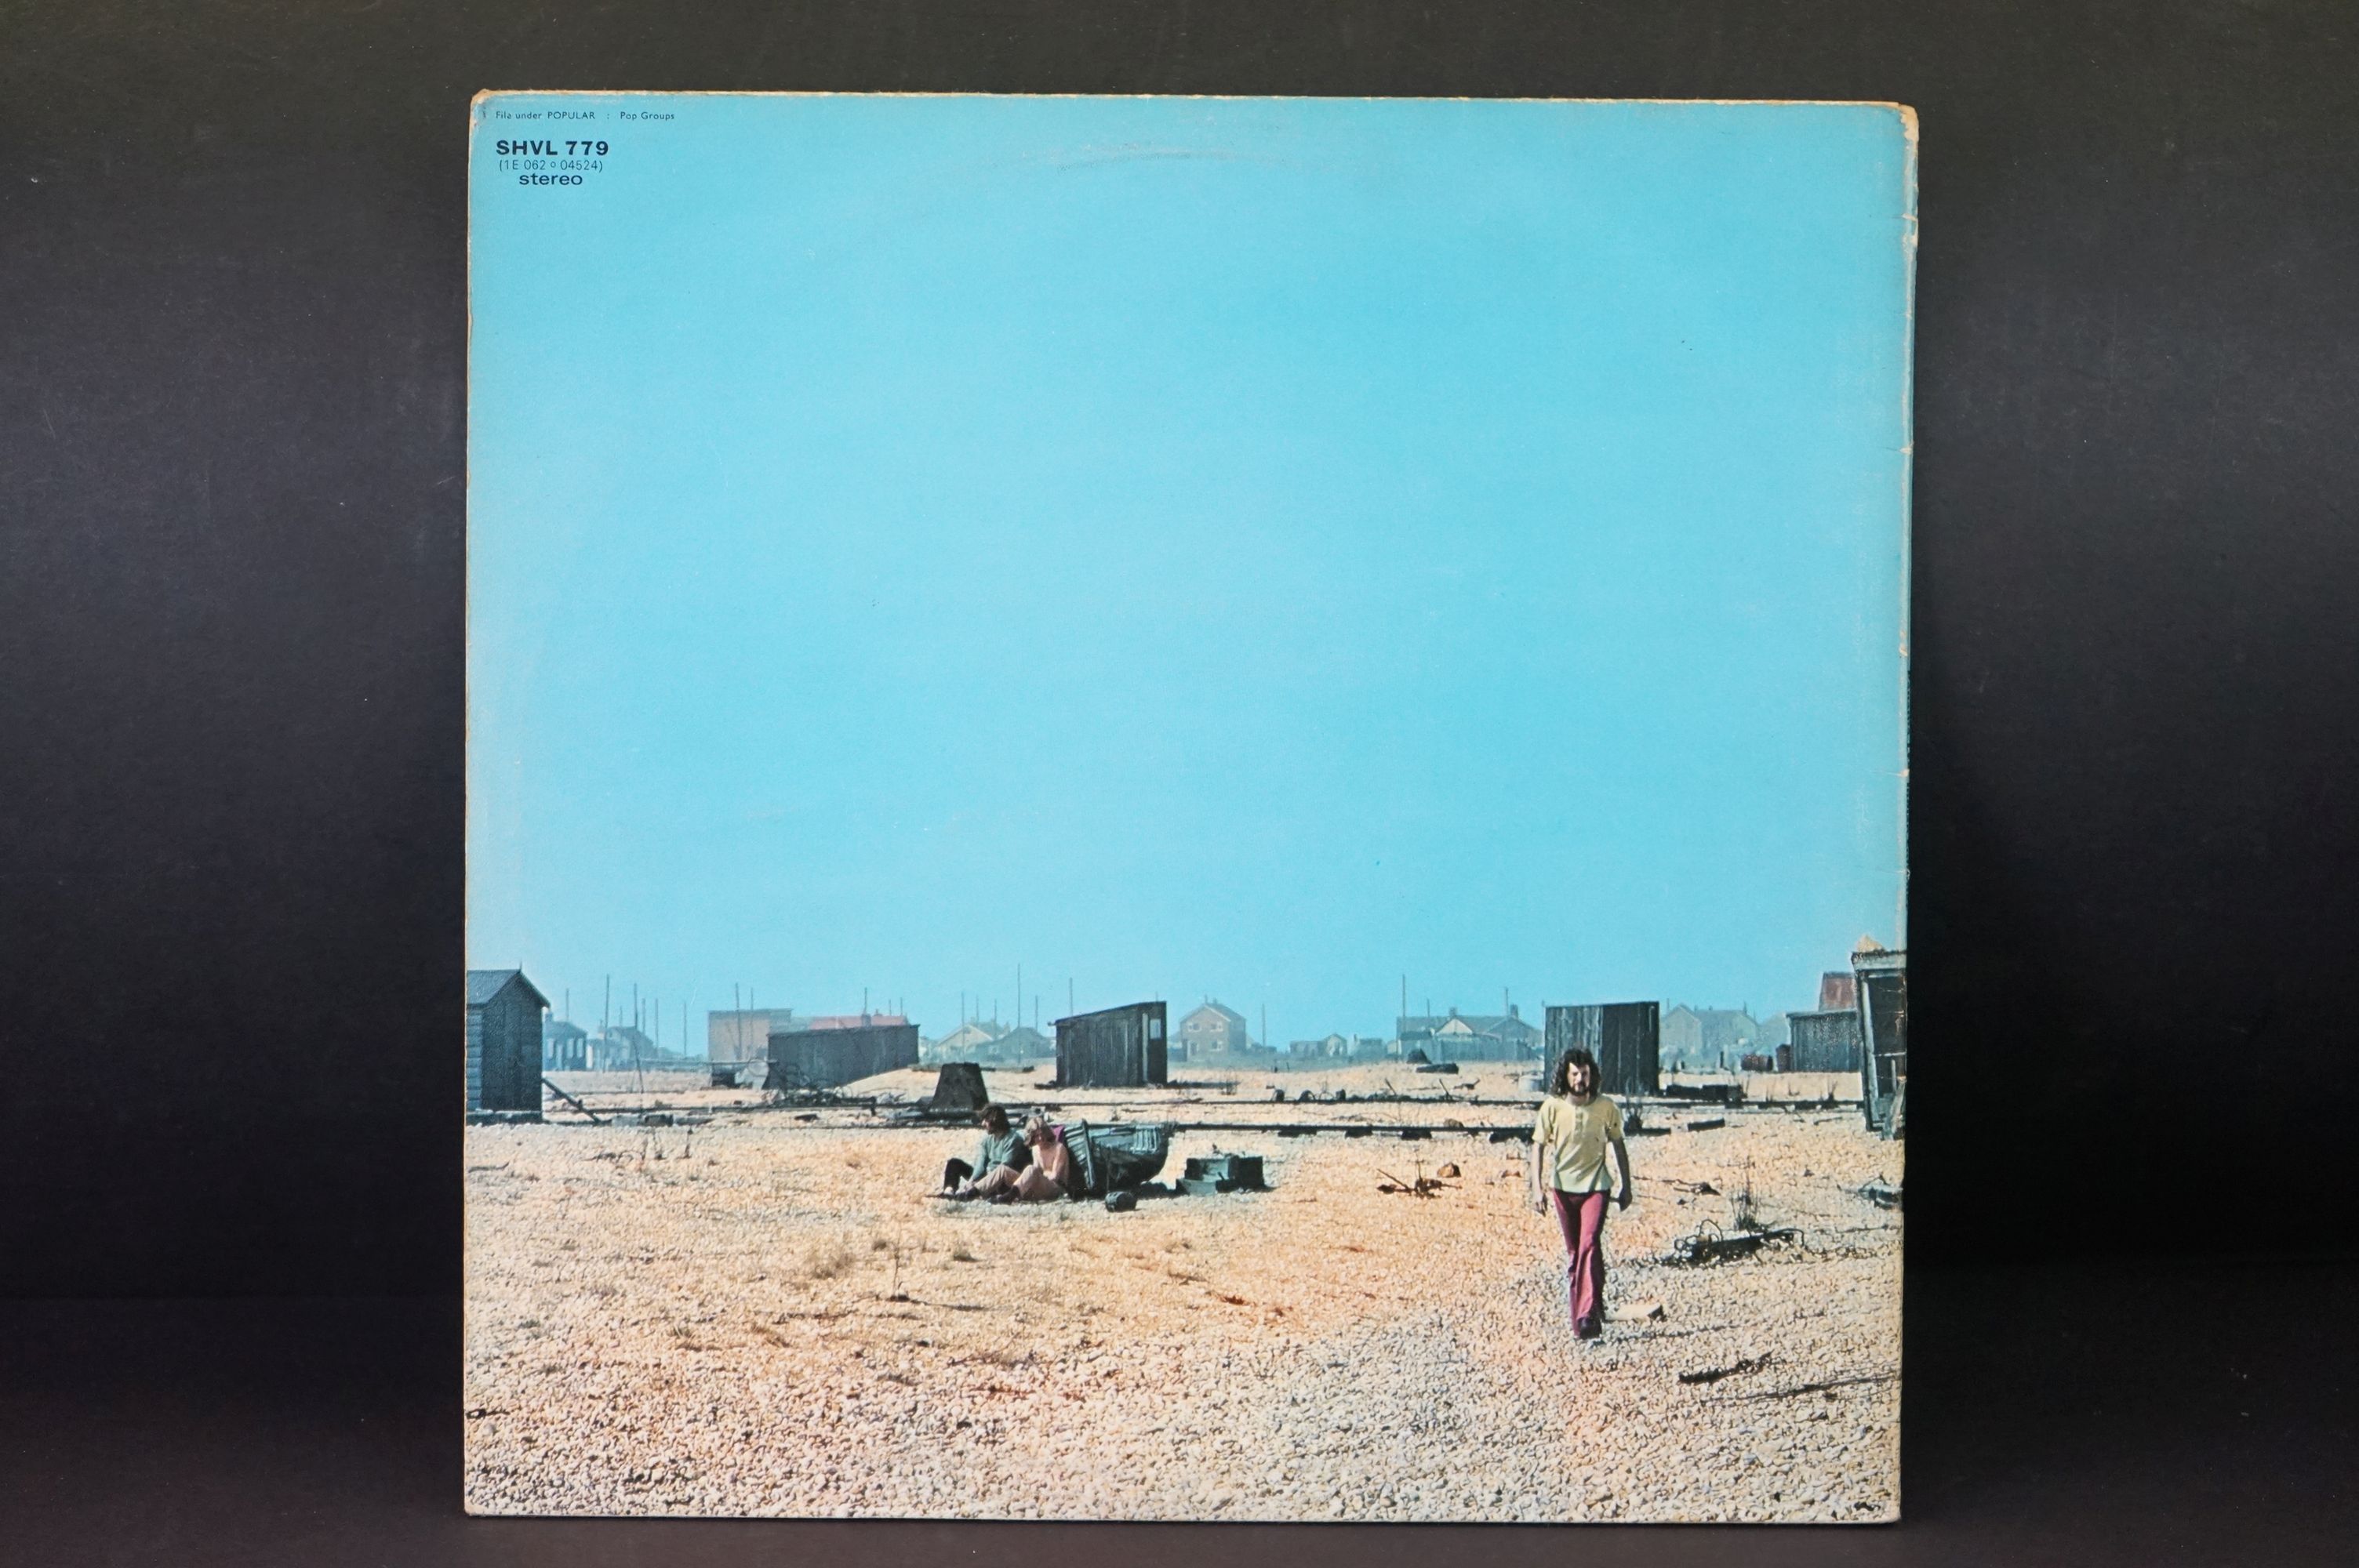 Vinyl - Panama Limited – Indian Summer, original UK 1970 1st pressing, no EMI box, Harvest records - Image 7 of 7